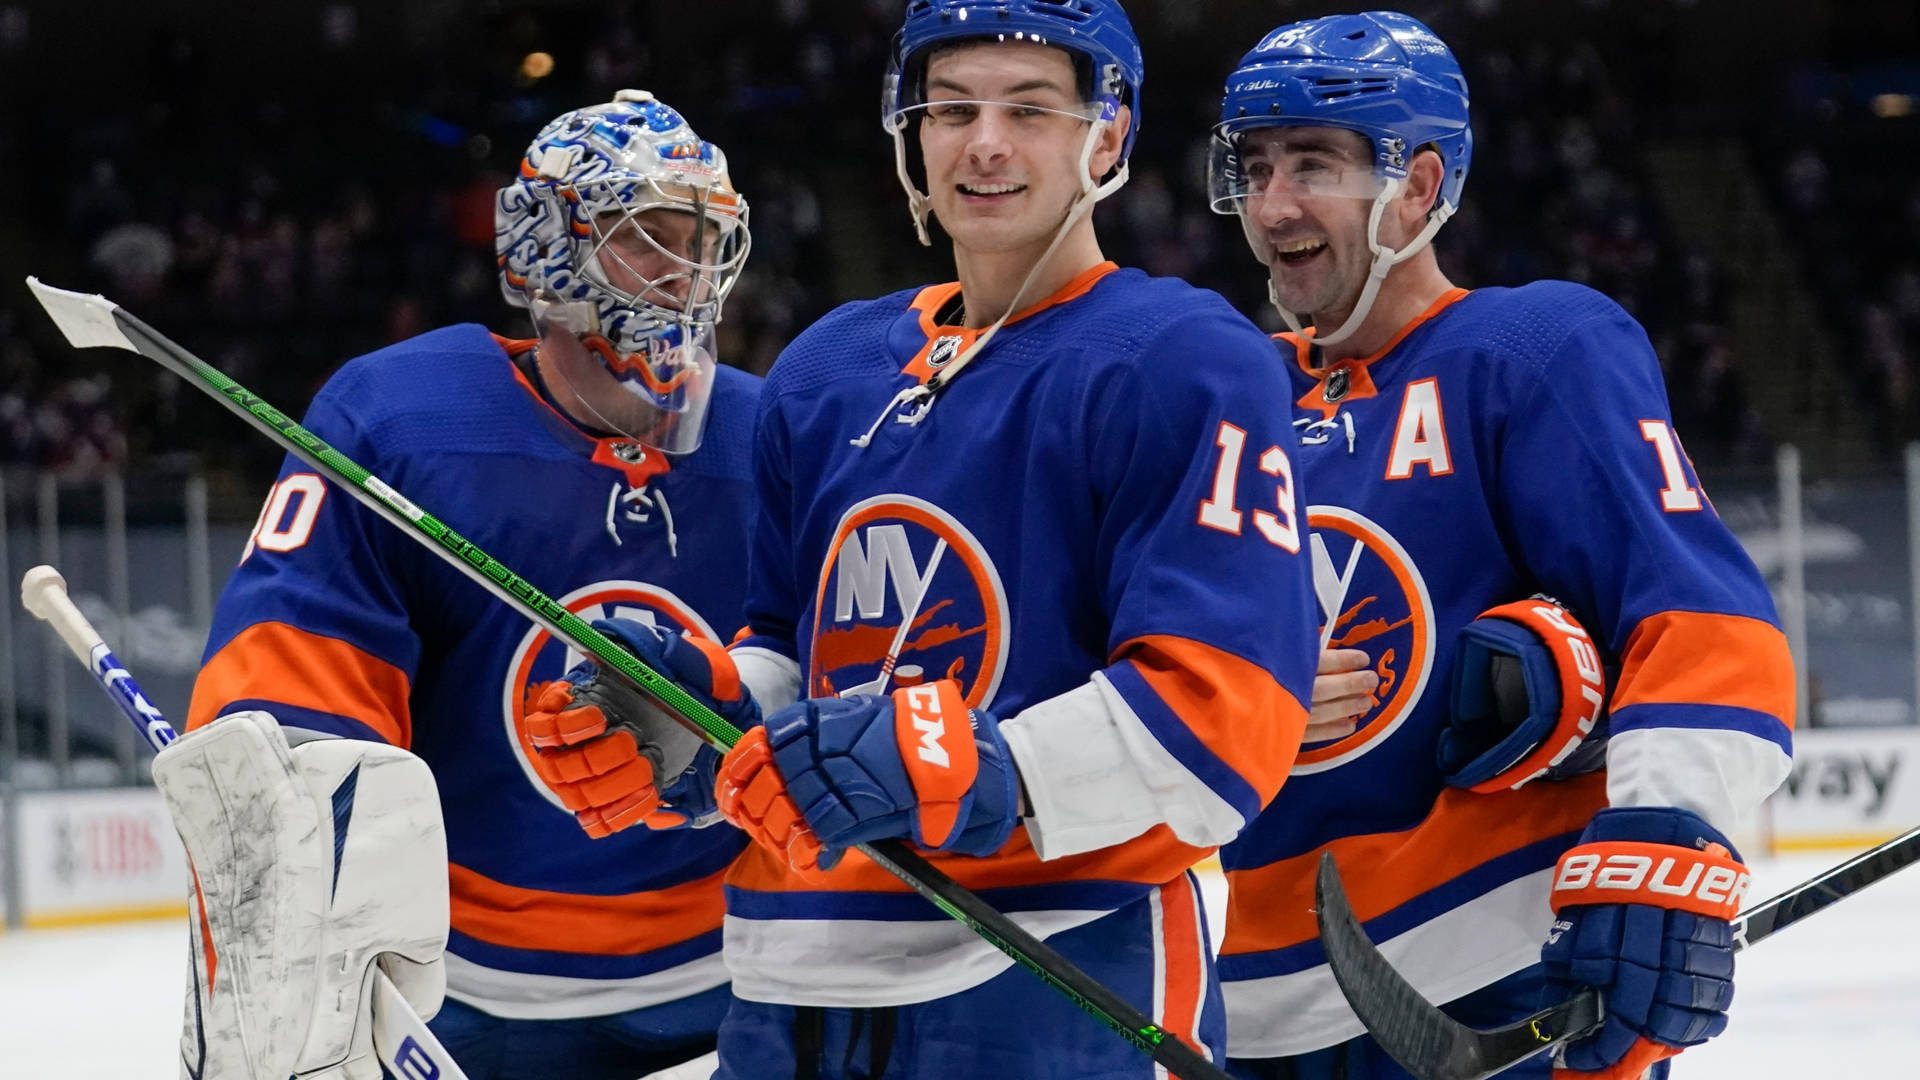 Novosjogadores De Hóquei No Gelo Do New York Islanders, Mathew Barzal E Seus Companheiros De Equipe. Papel de Parede